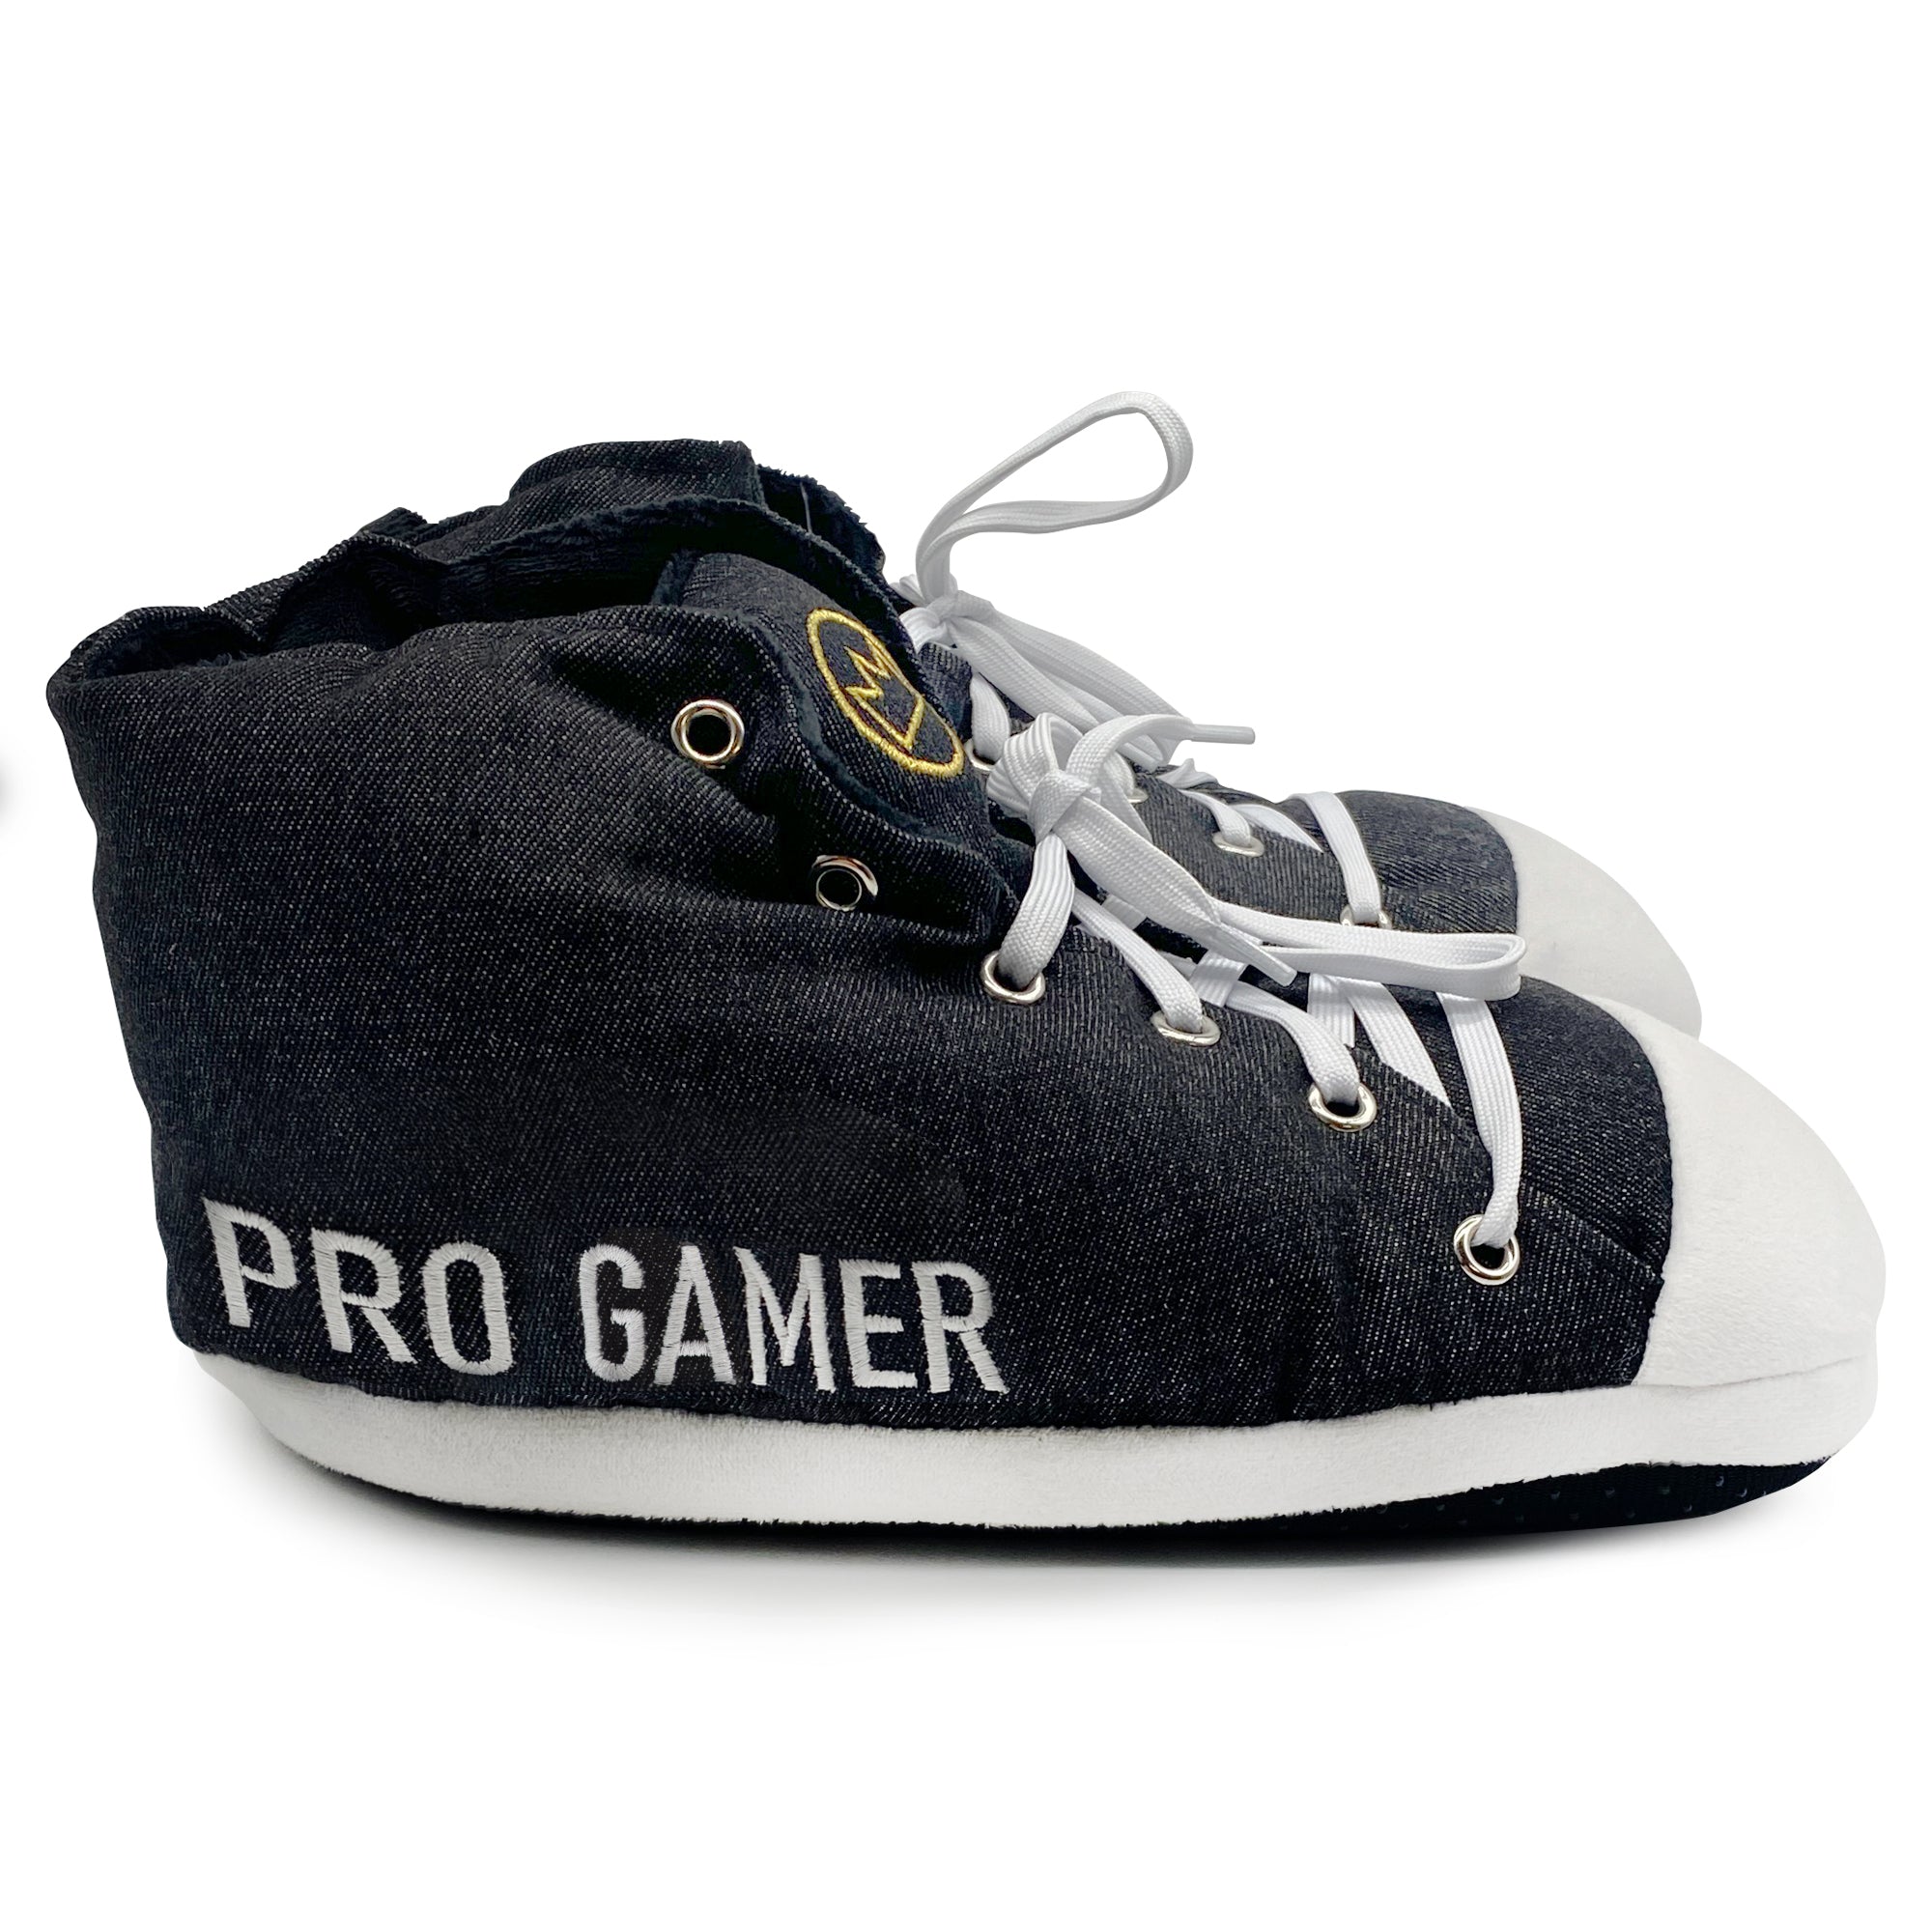 Baffies - Krazy Kicks - Pro Gamer - Slippers - Small